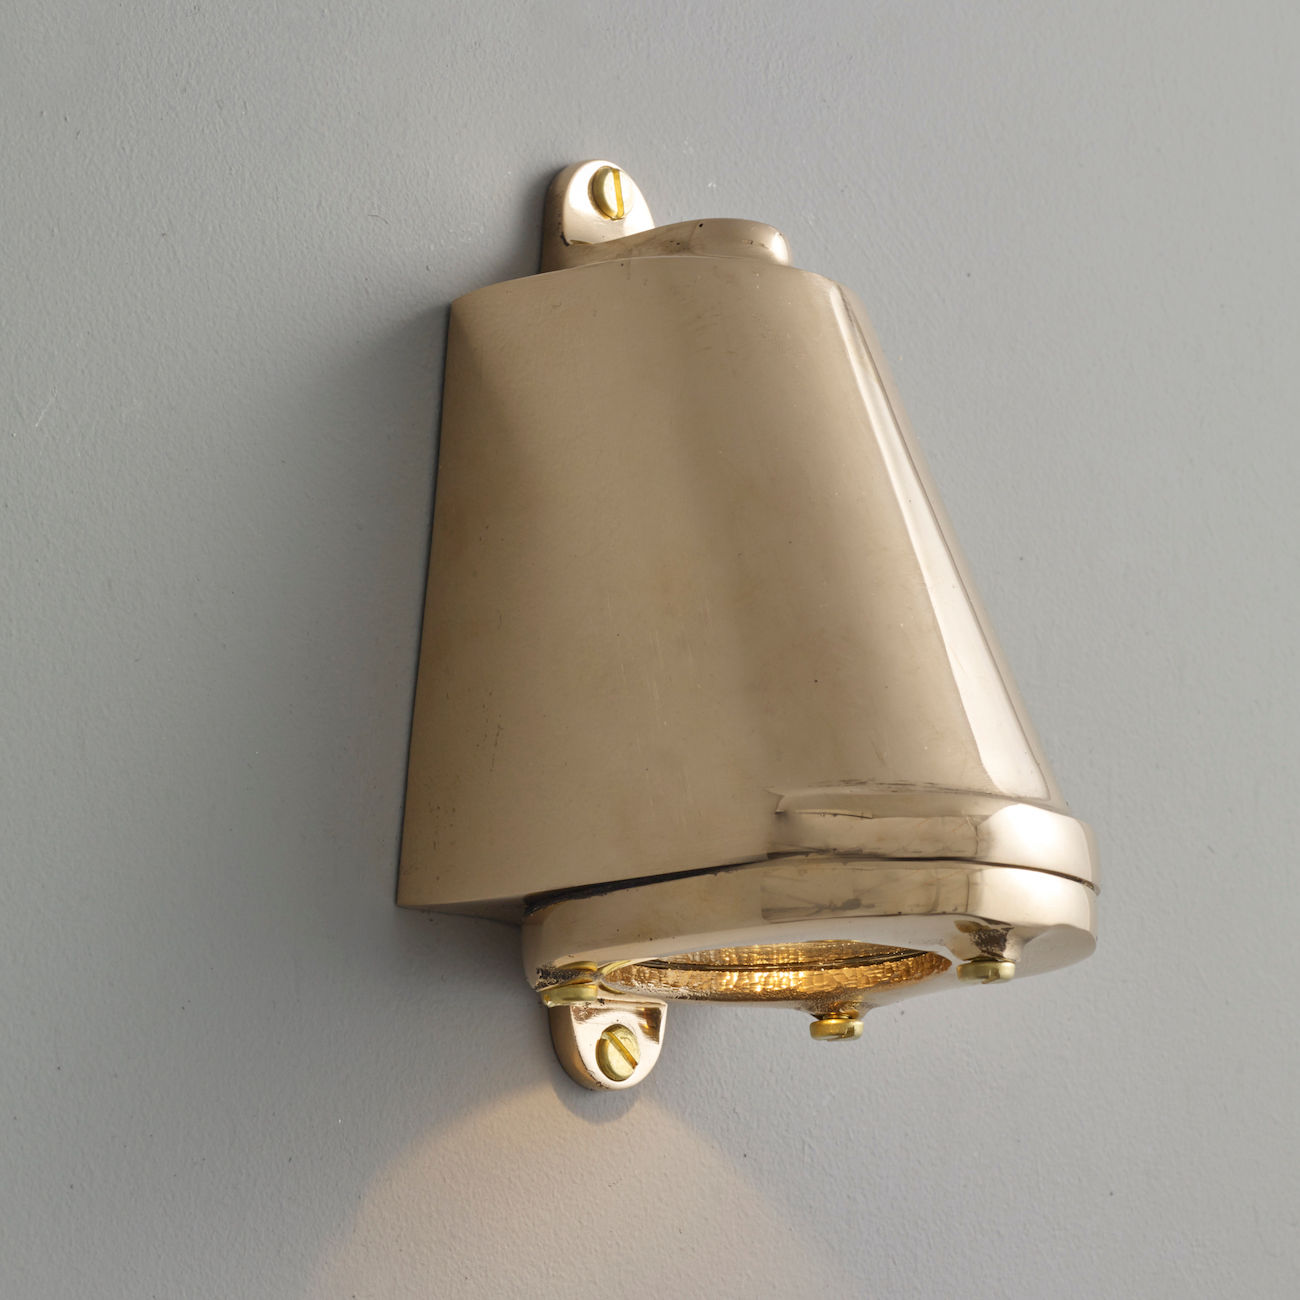 Small English Low Voltage Spotlight - Mast Light 0751: Niedervolt-Wandstrahler Mast Light 0751, Bronze poliert.